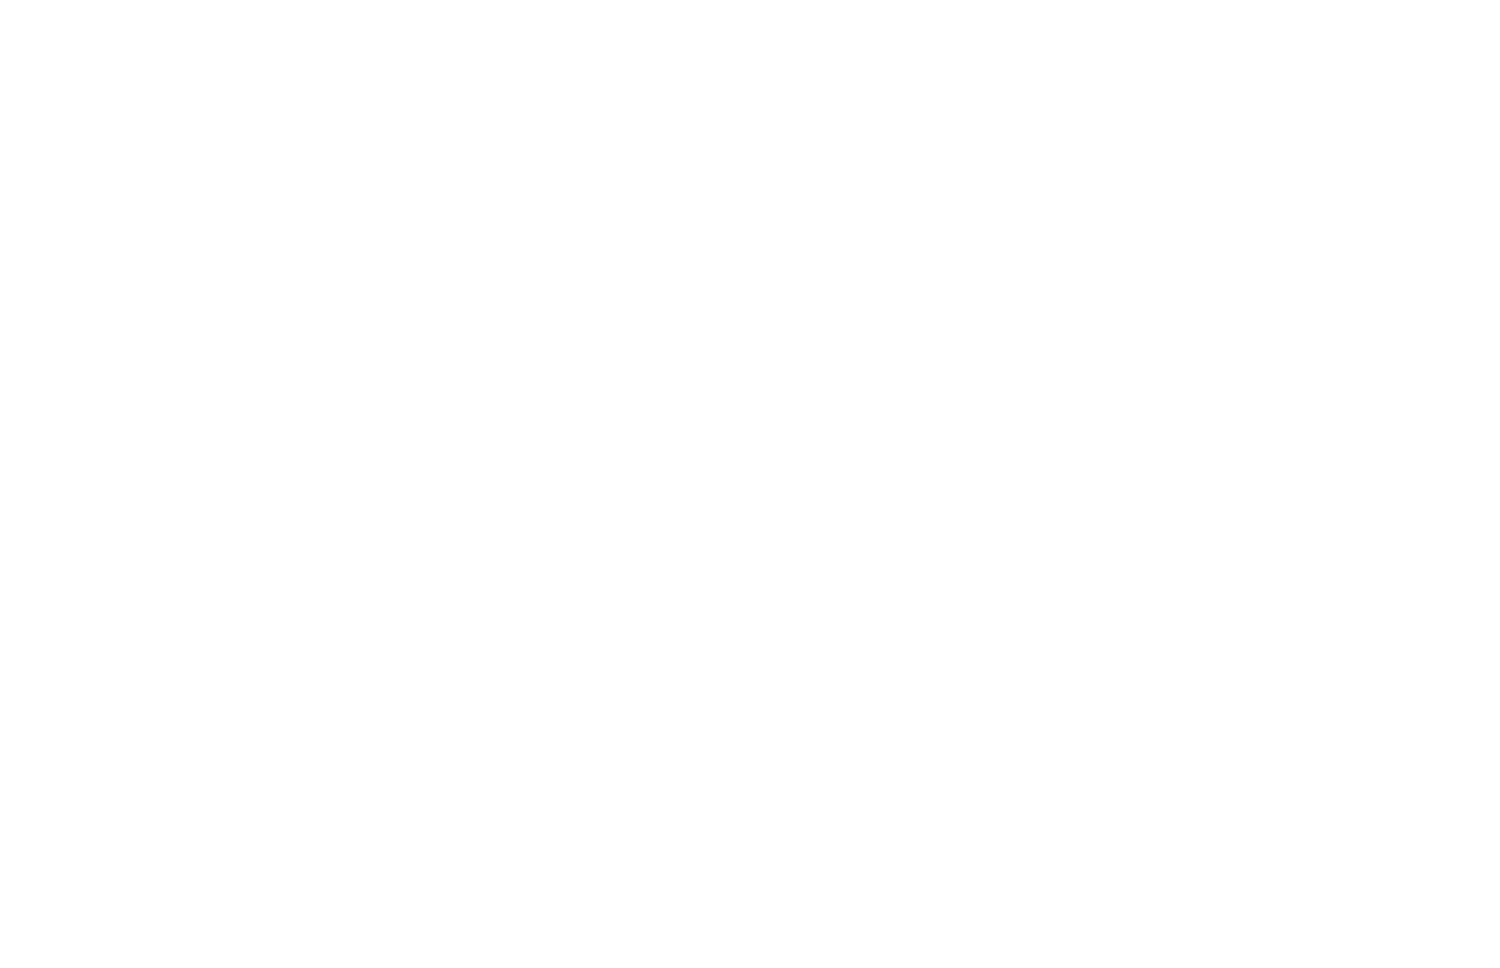 Raintrees Tavern, Manunda, QLD